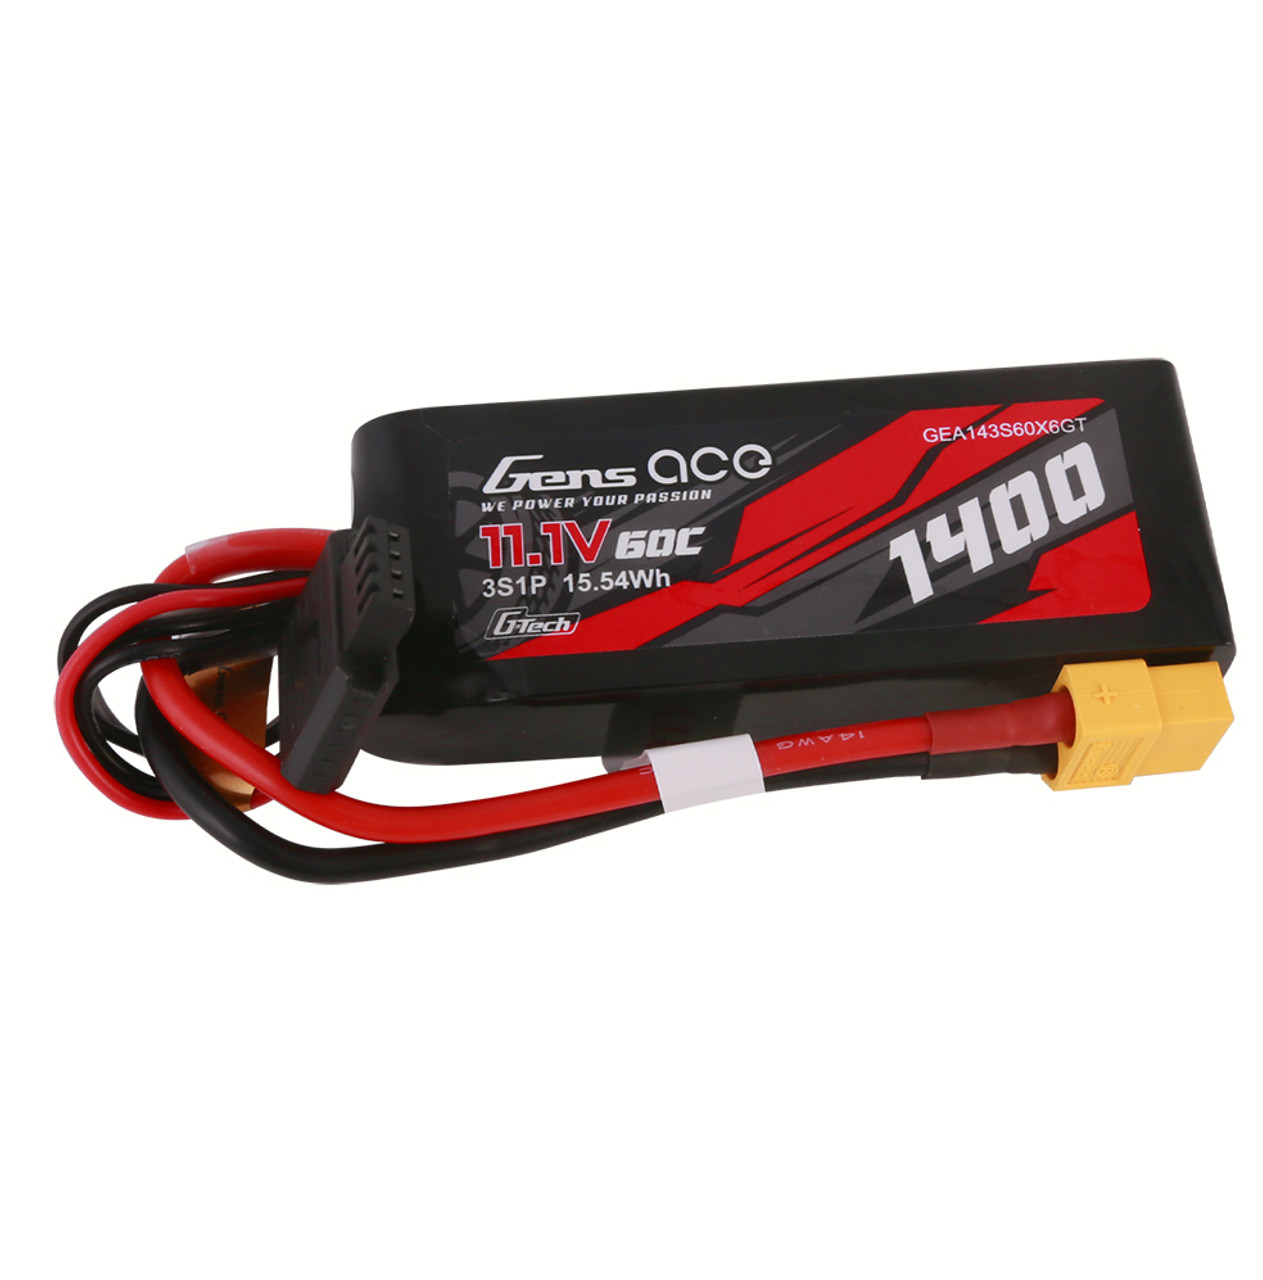 Batterie Lipo 3S 11.1V 2200mAh 30C-XT60